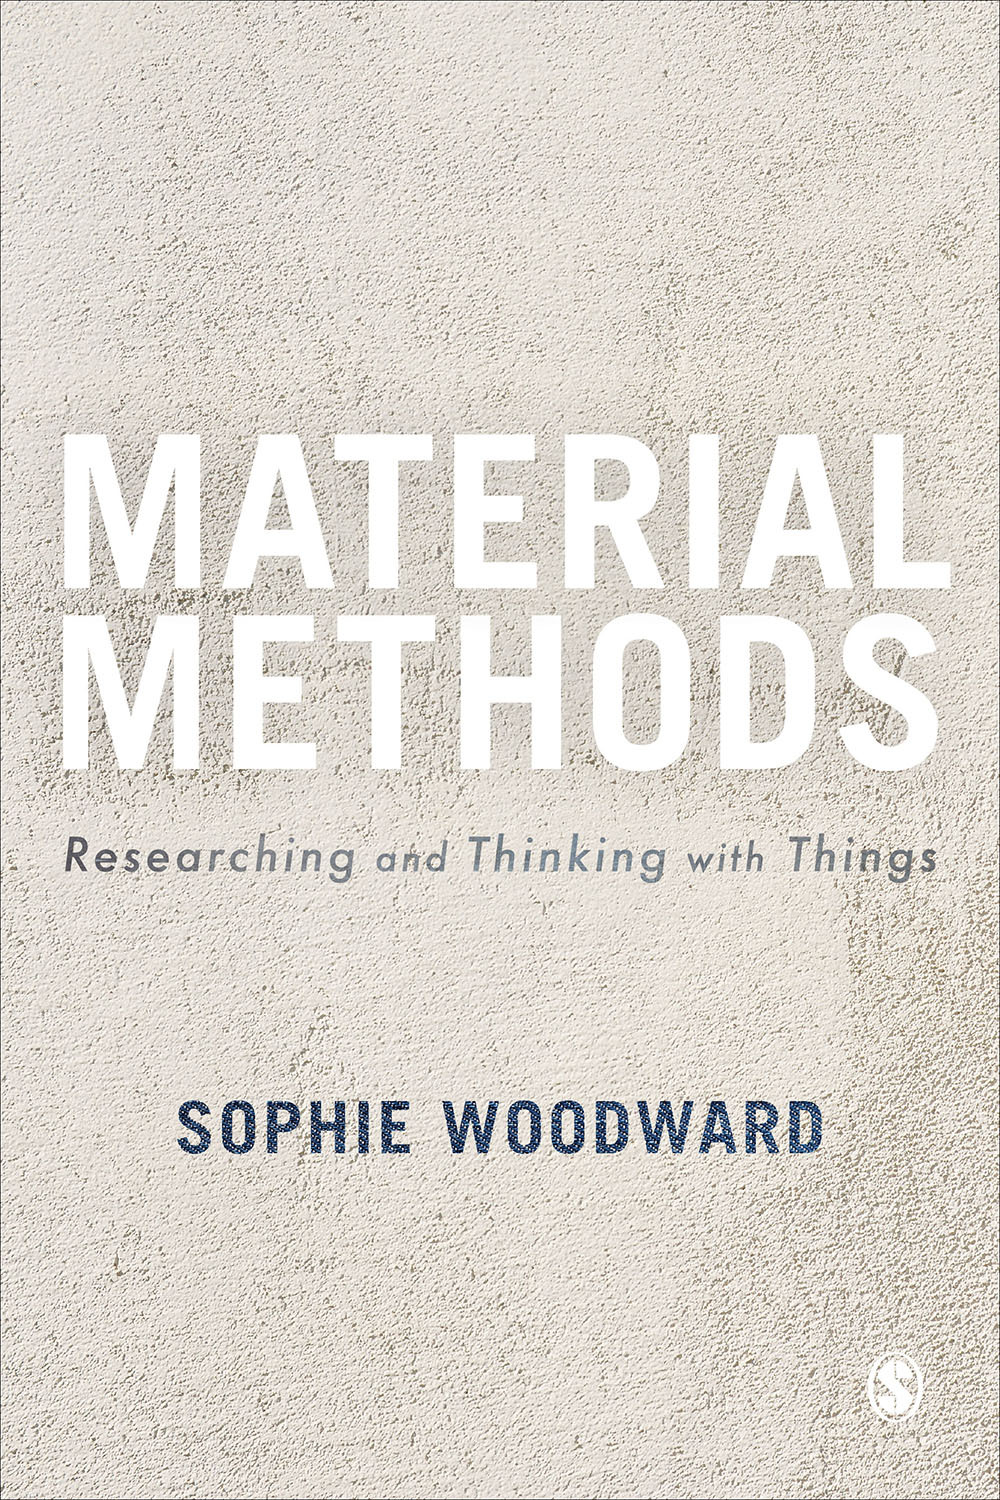 Materials and methods. Софи Вудворд. Sophia Woodward.